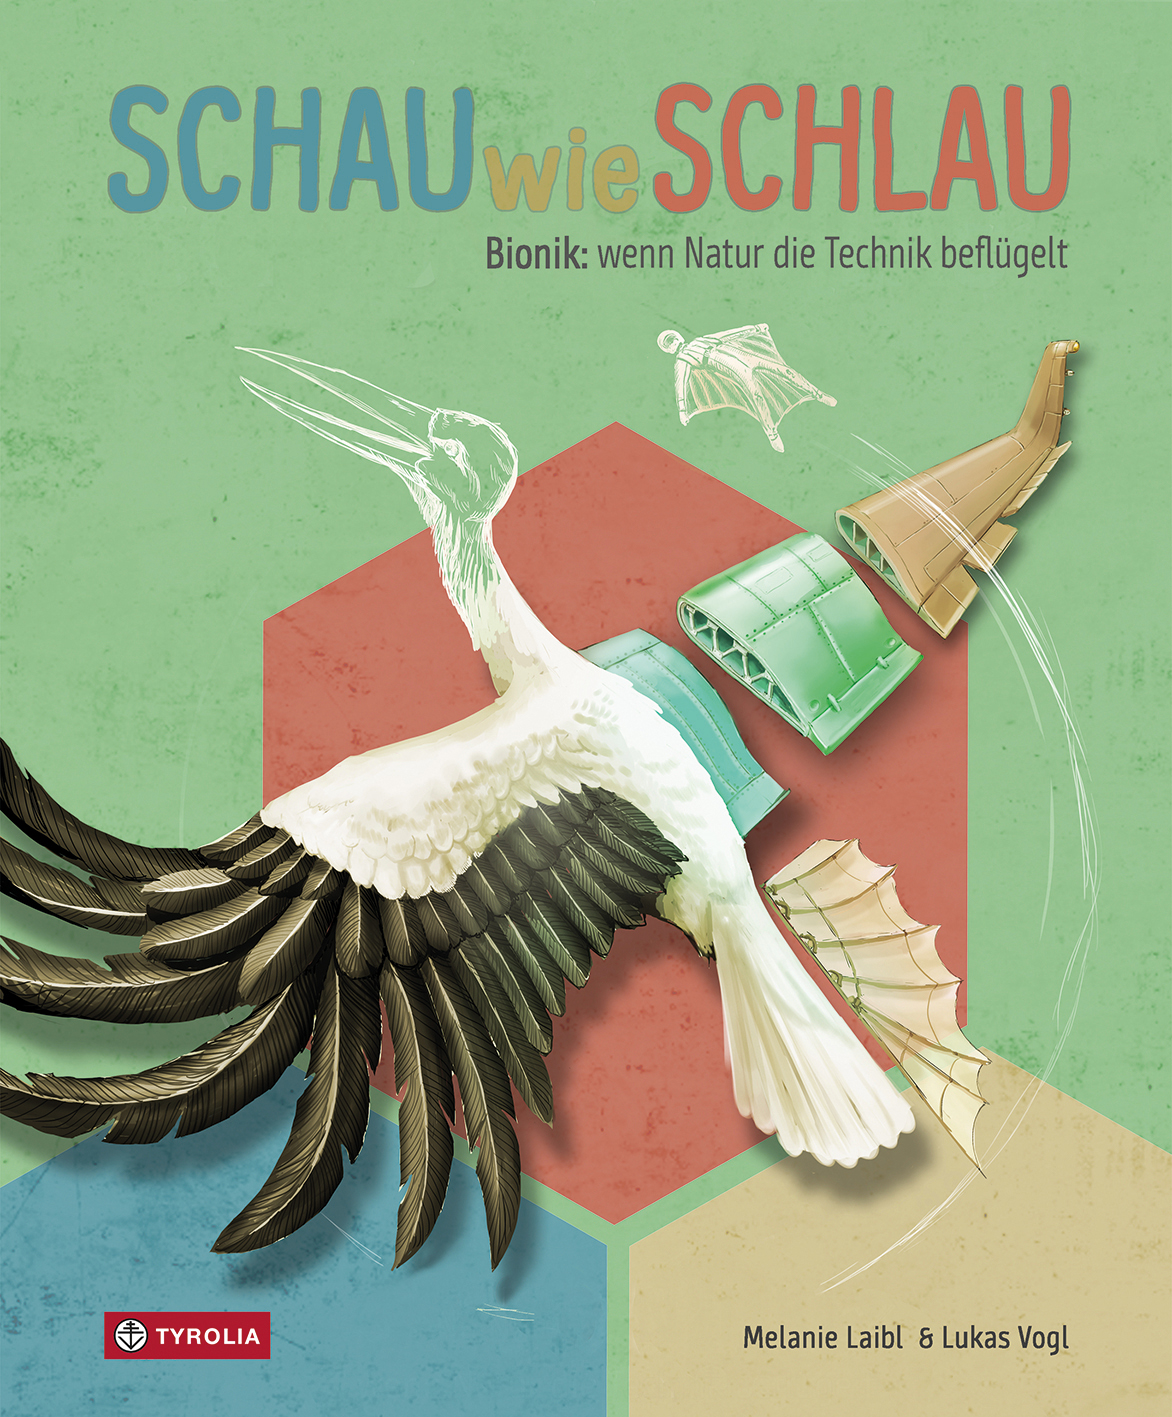 Buchcover "SCHAU wie SCHLAU", Tyrolia